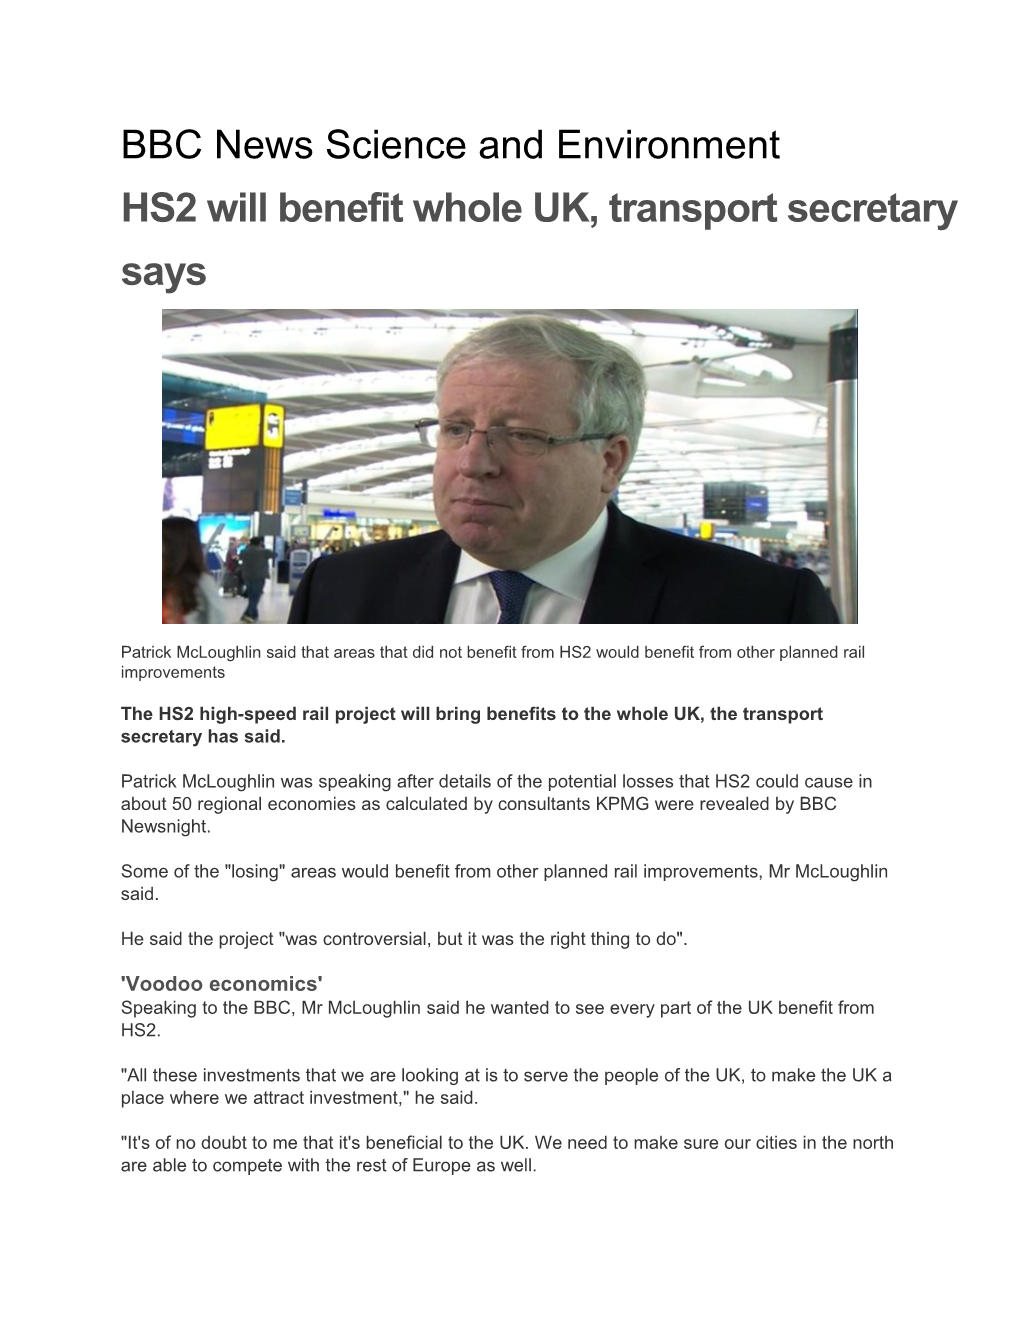 HS2 Will Benefit Whole UK, Transport Secretary